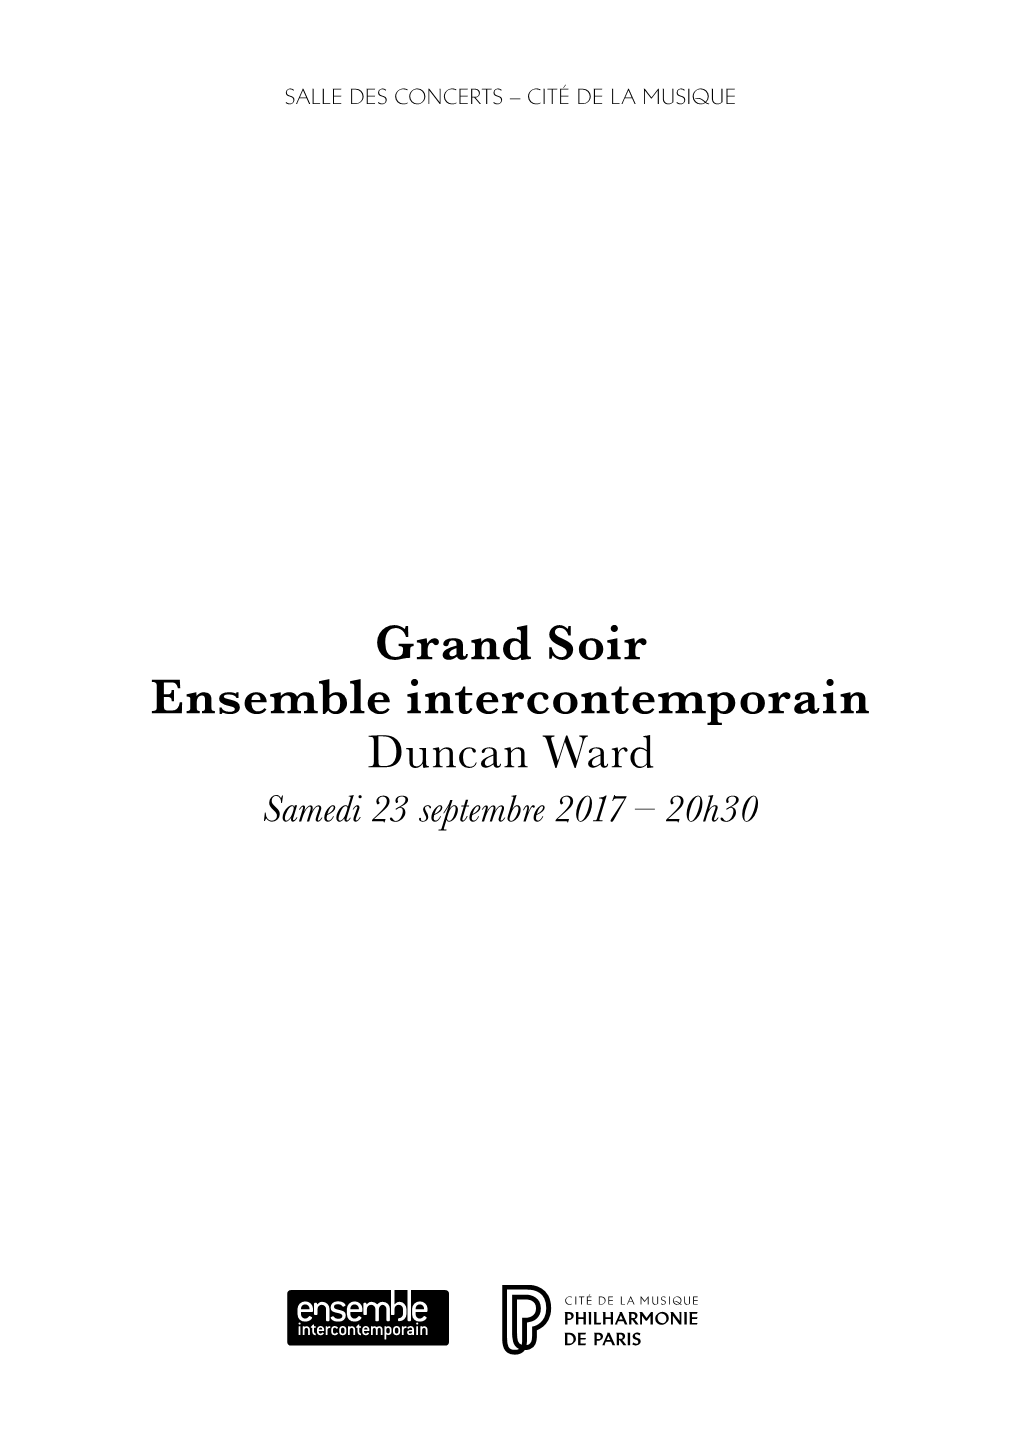 Grand Soir Ensemble Intercontemporain